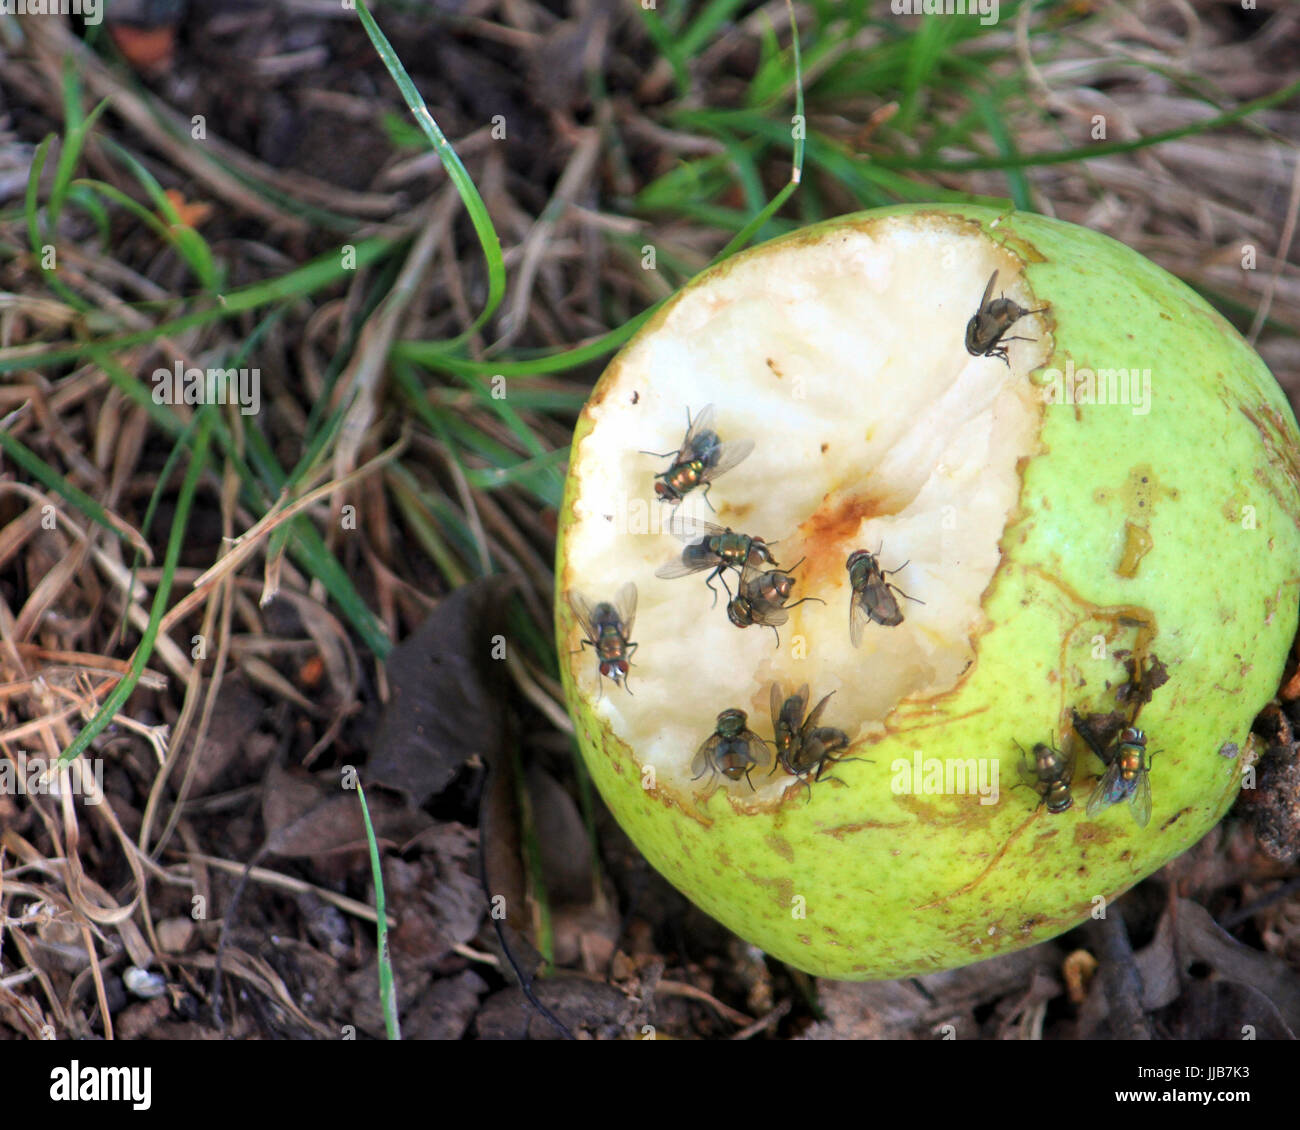 Flies gather on a half-eaten fallen pear fruit. Stock Photo